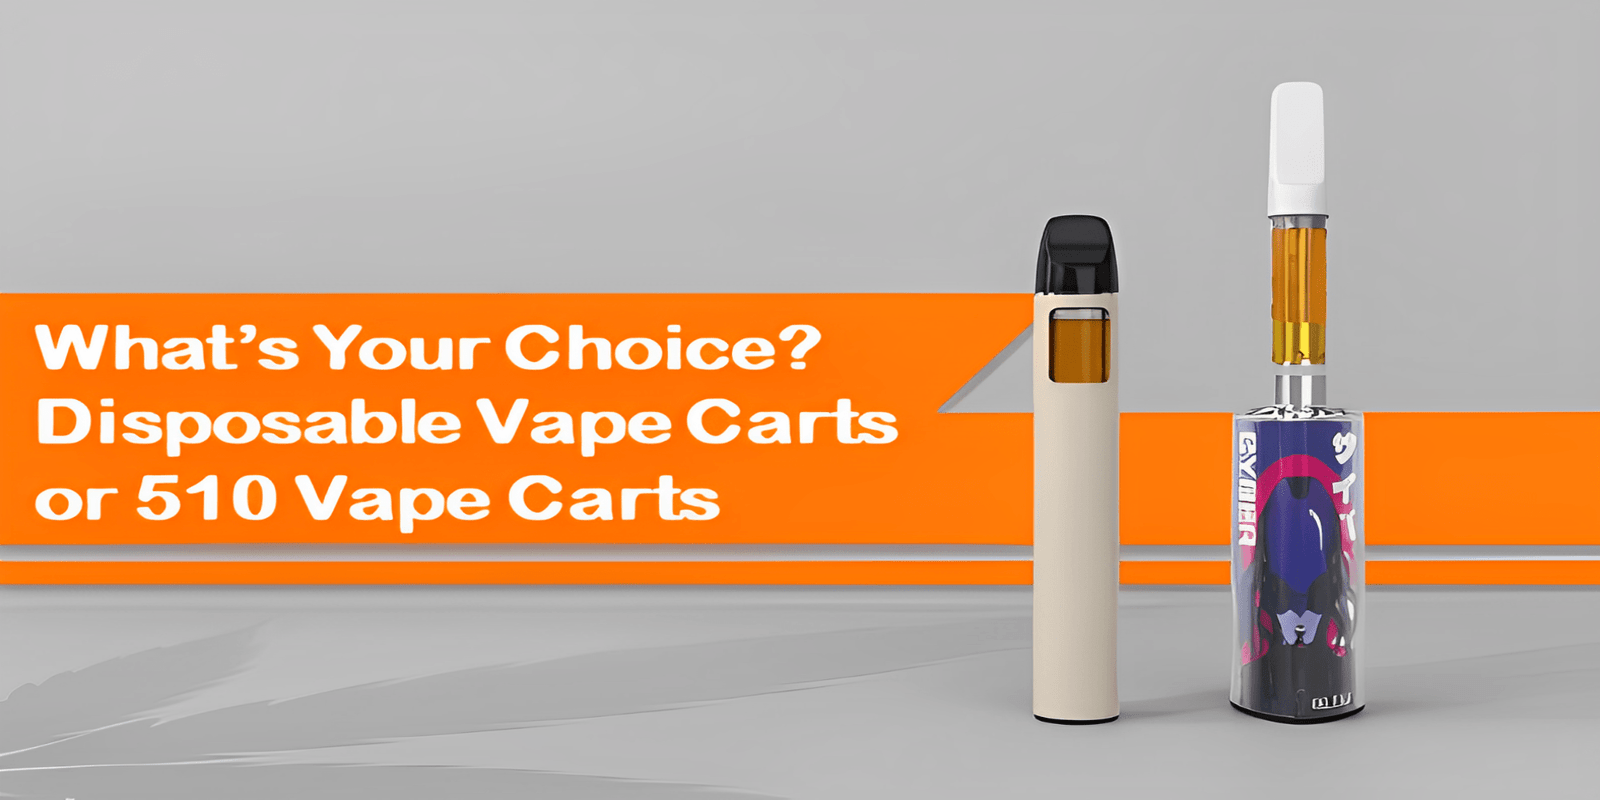 What's your choice? Disposable vape carts or 510 Vape Carts